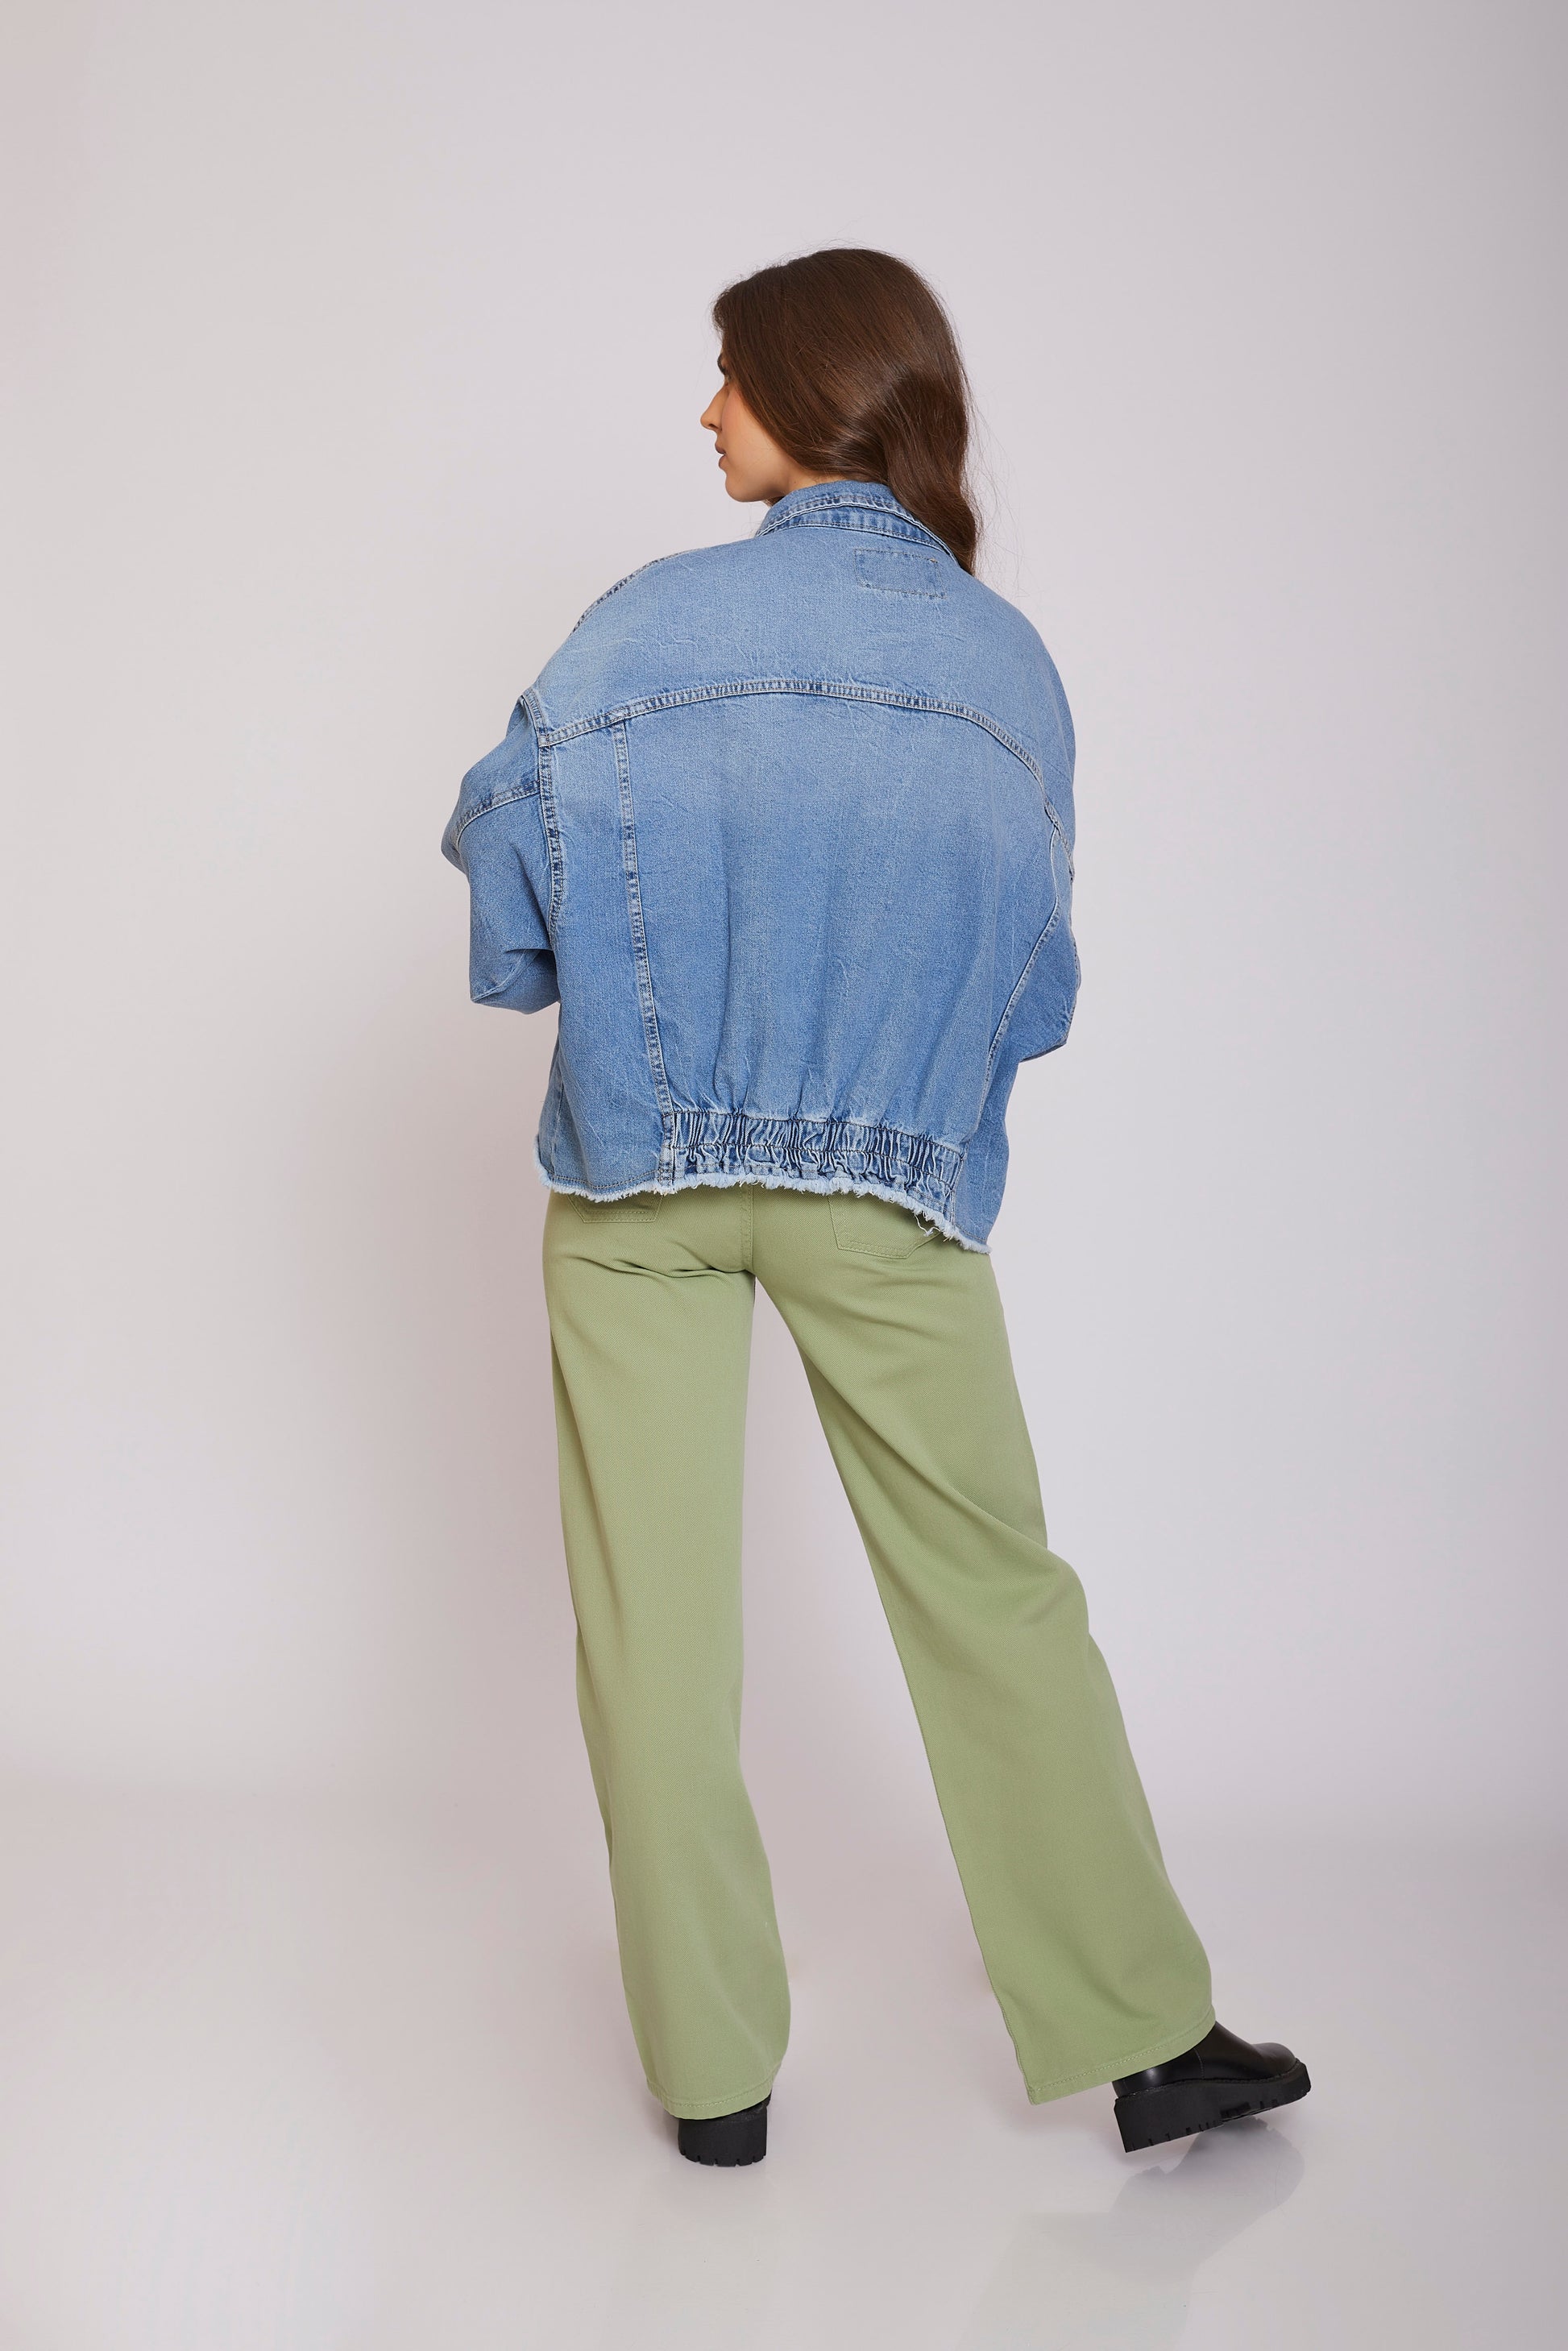 dj denim overshirt with pockets - elastic back - mid blue